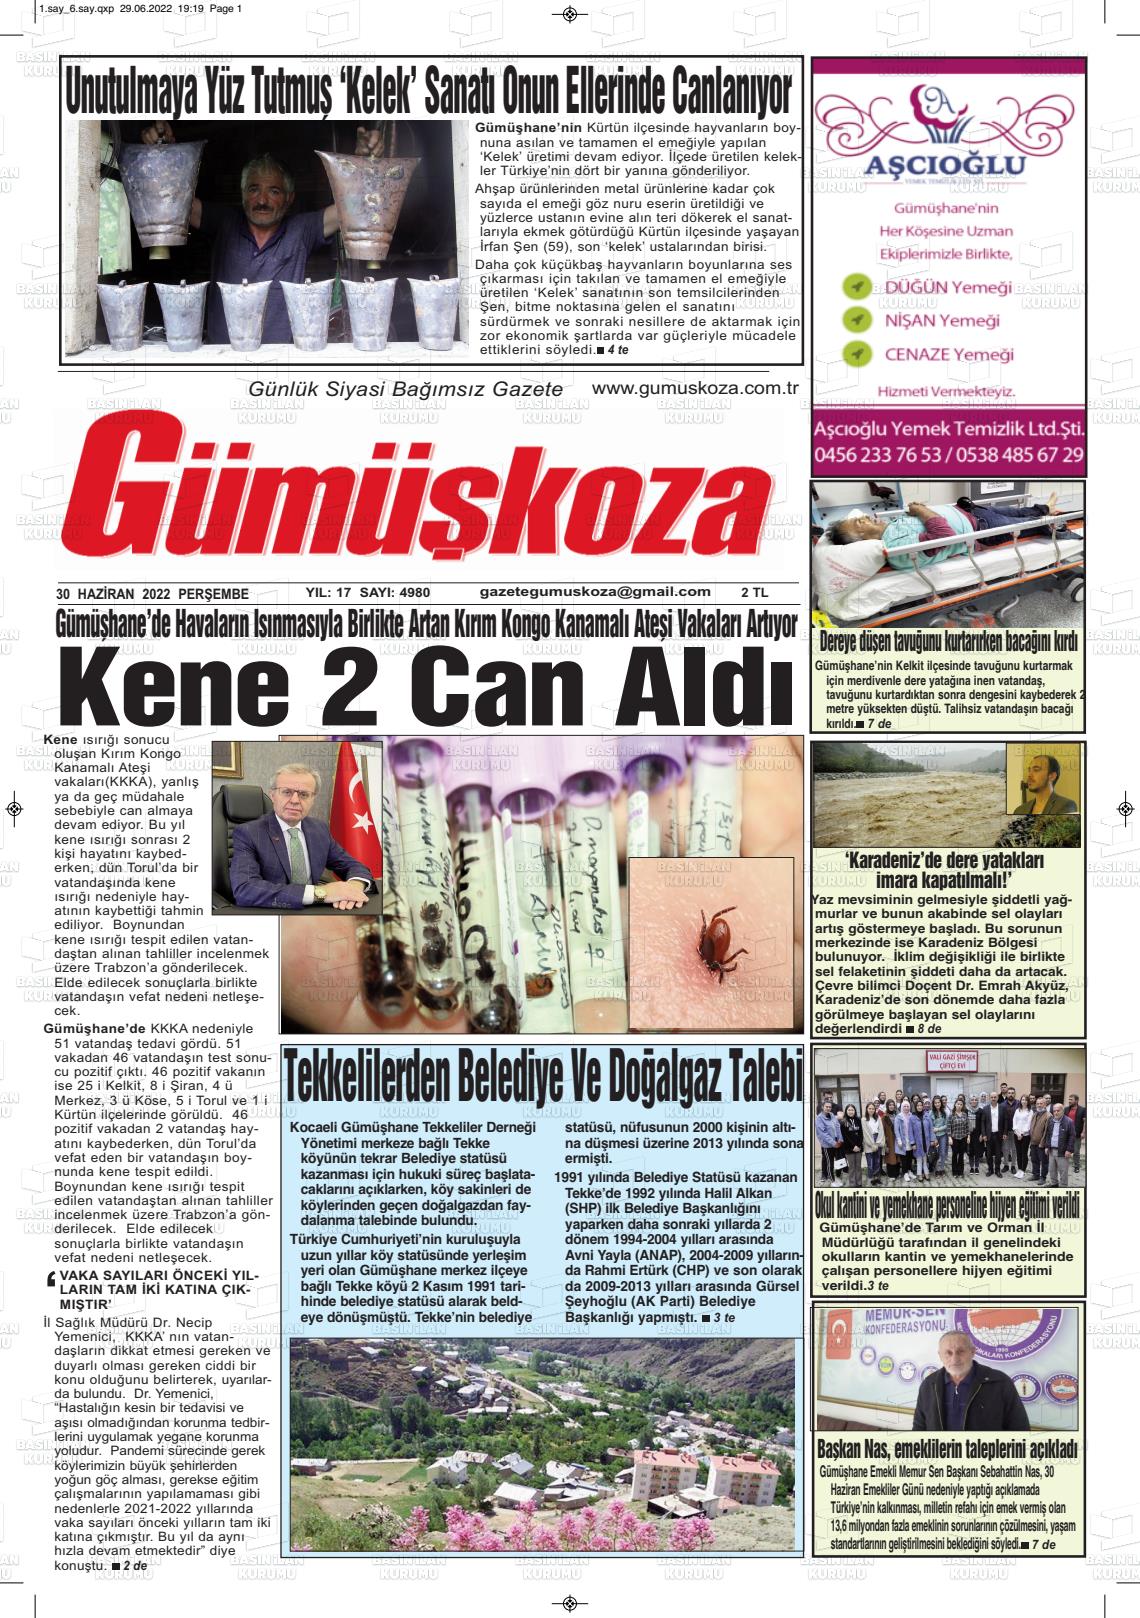 30 Haziran 2022 Gümüşkoza Gazete Manşeti